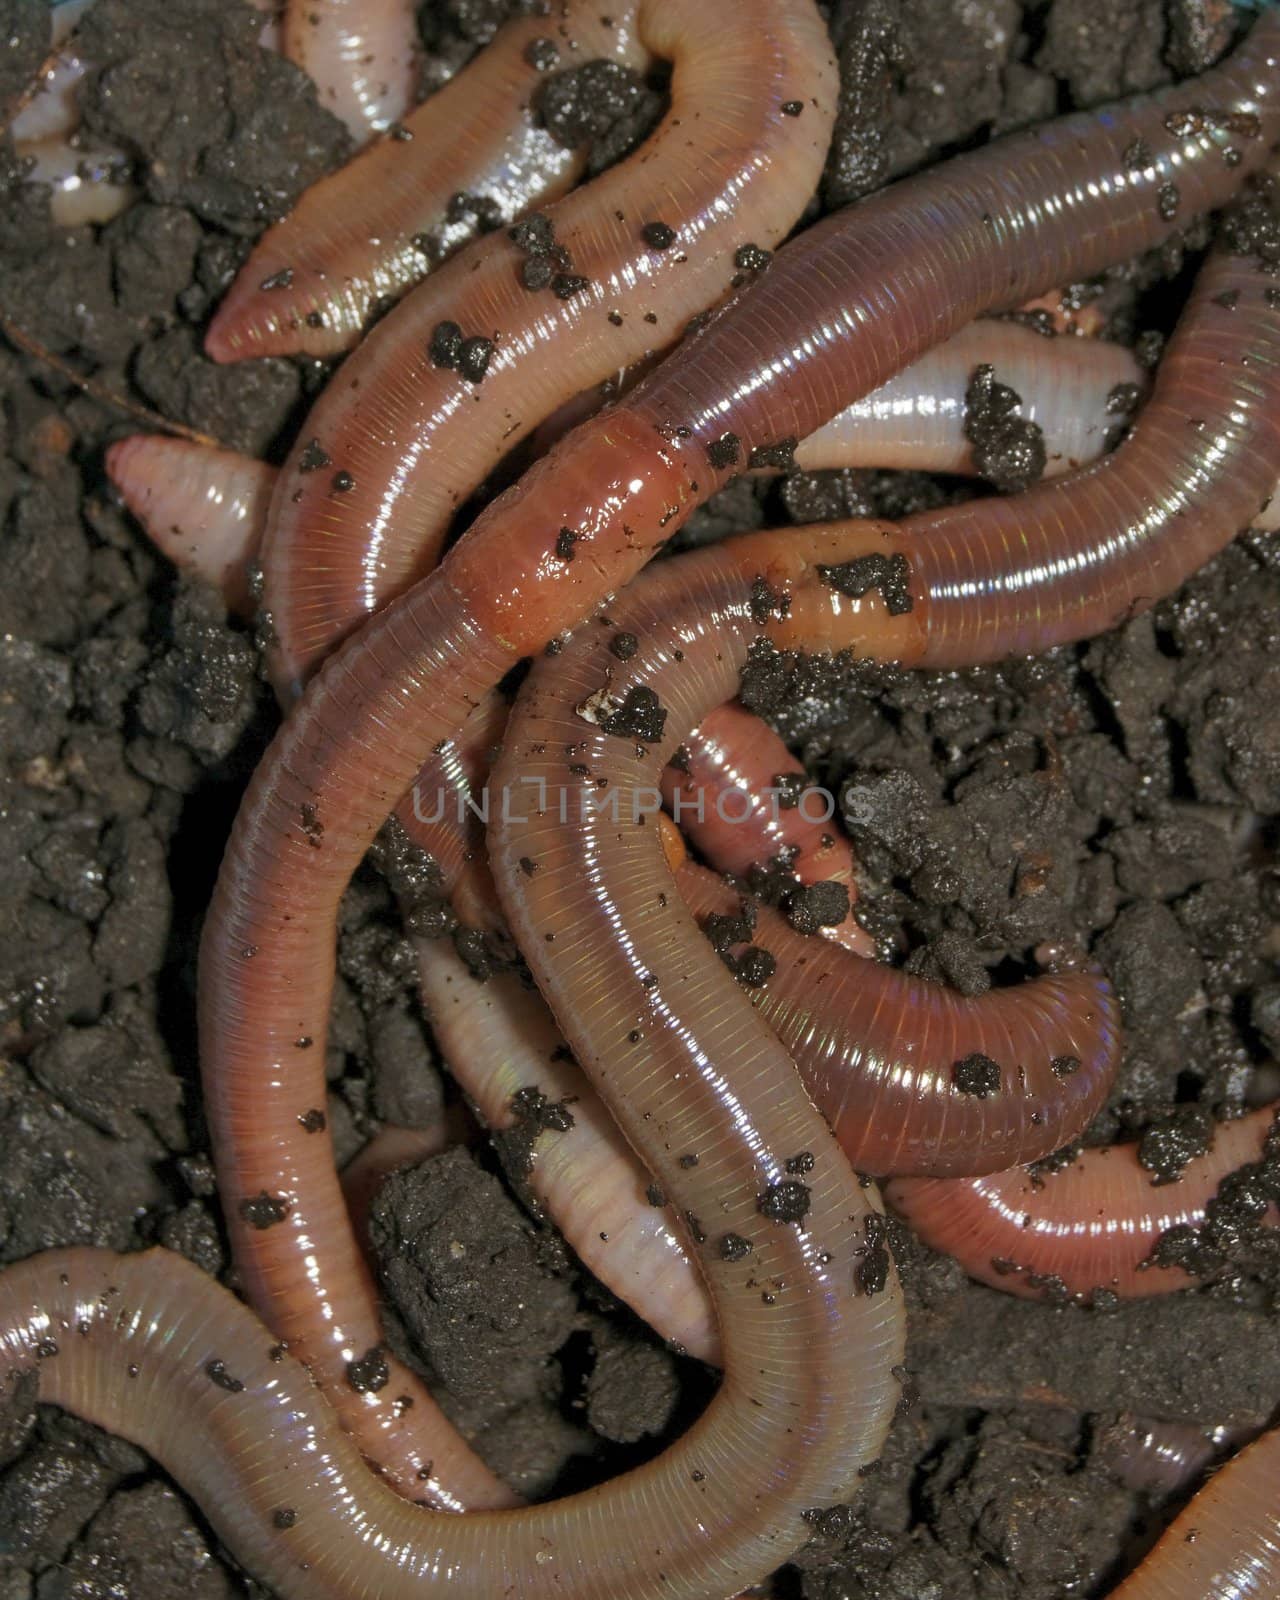 Nightcrawler earth worms used for fishing bait.